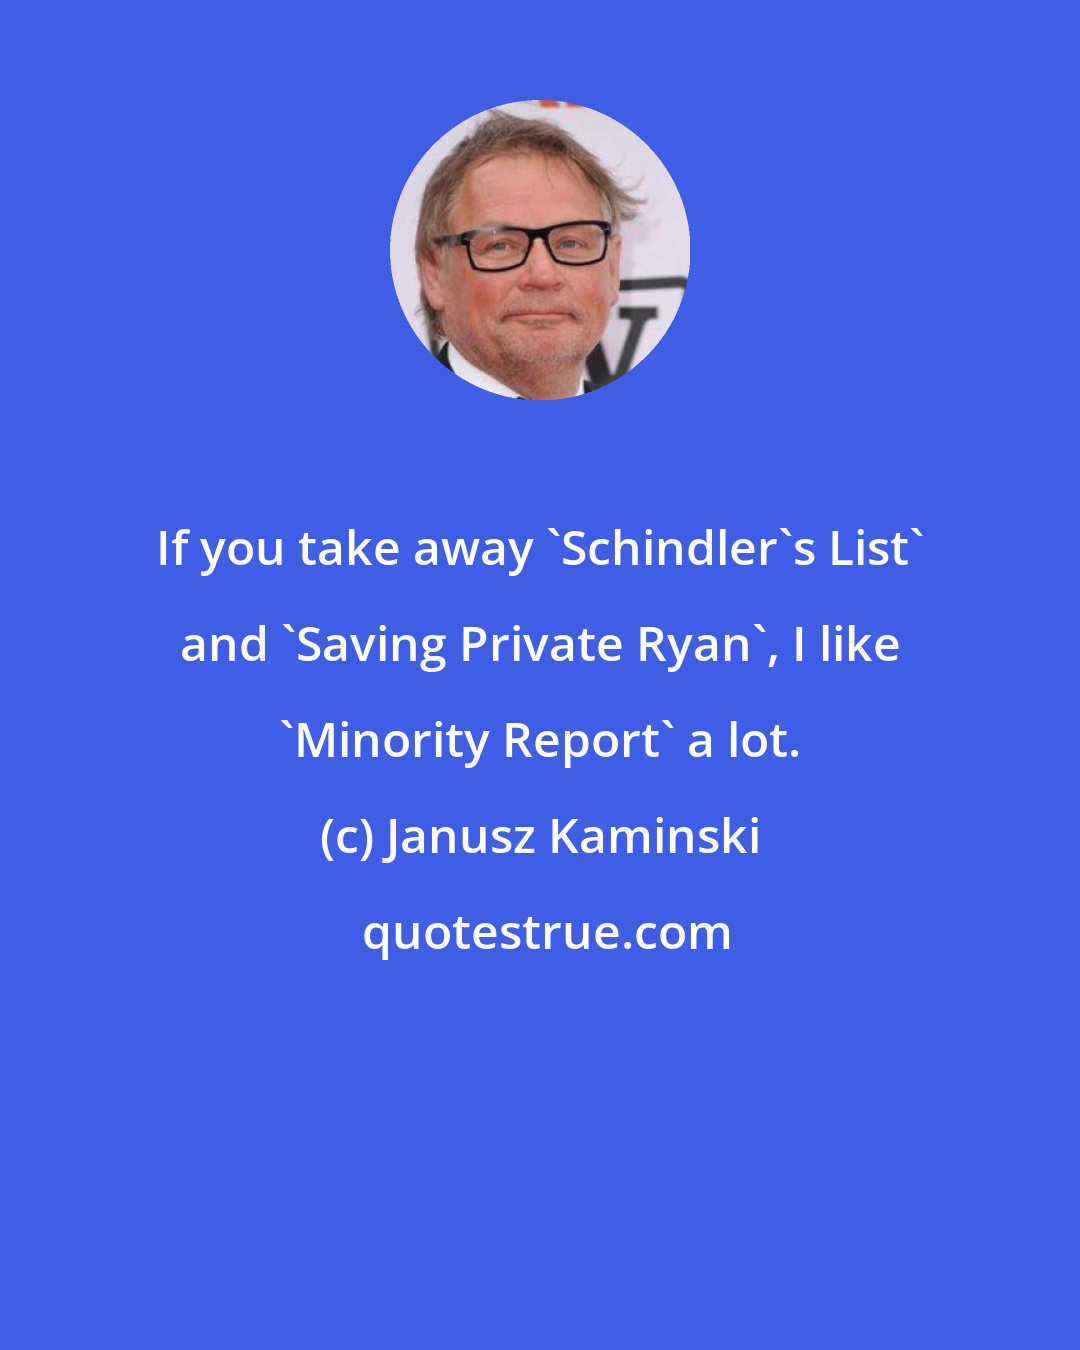 Janusz Kaminski: If you take away 'Schindler's List' and 'Saving Private Ryan', I like 'Minority Report' a lot.